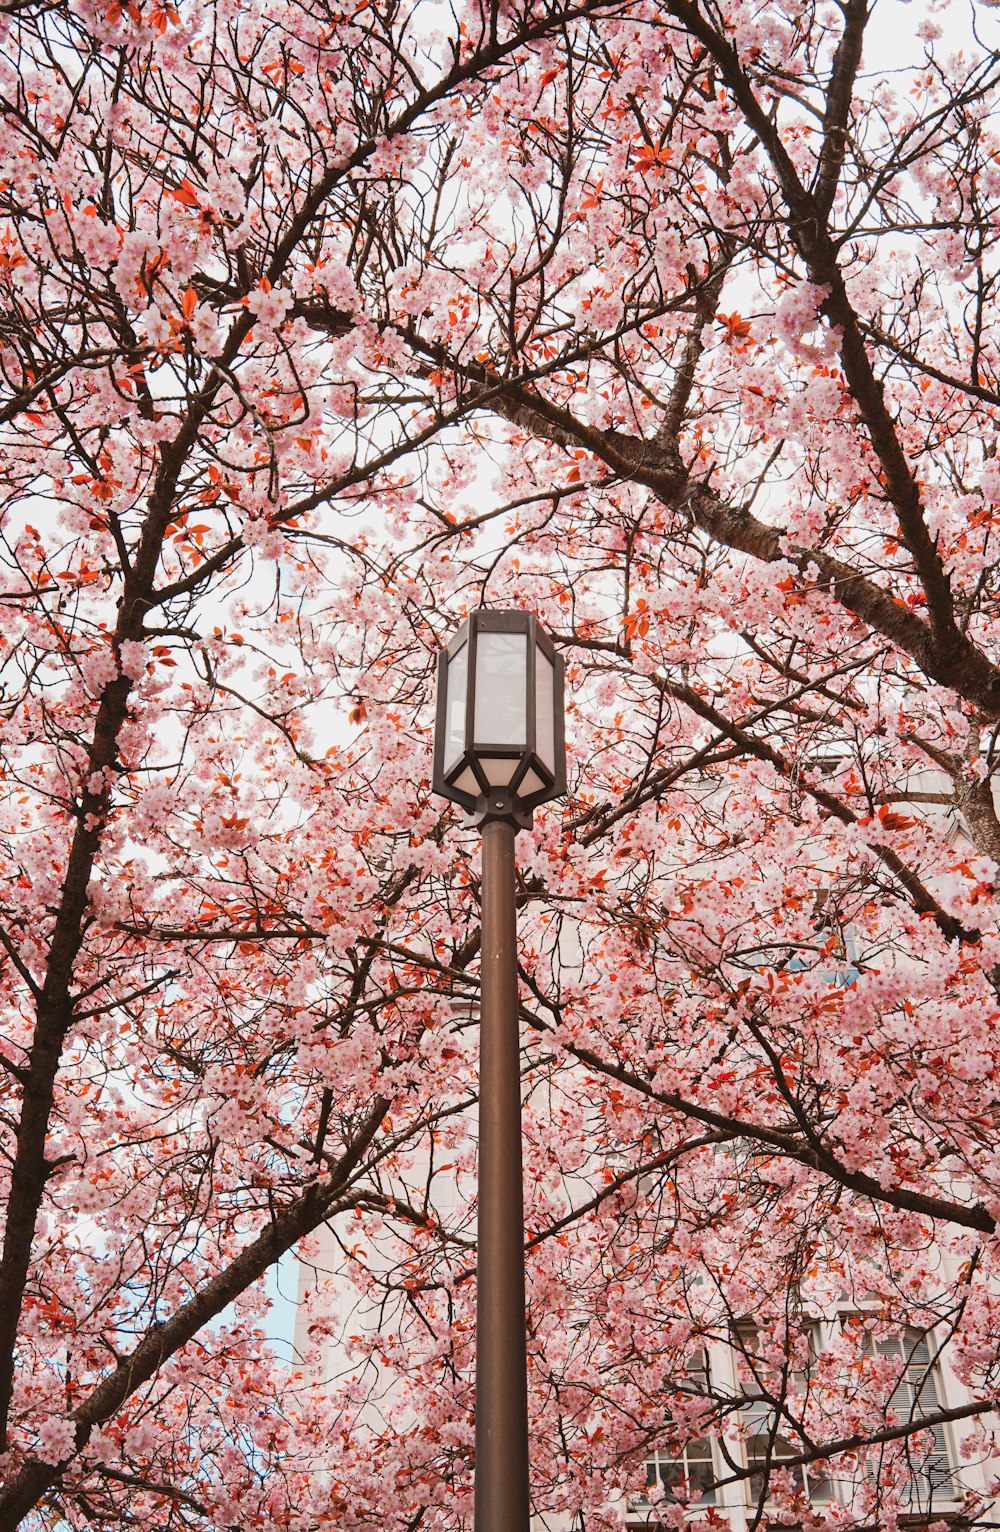 poste de luz preto e branco sob a árvore da folha rosa